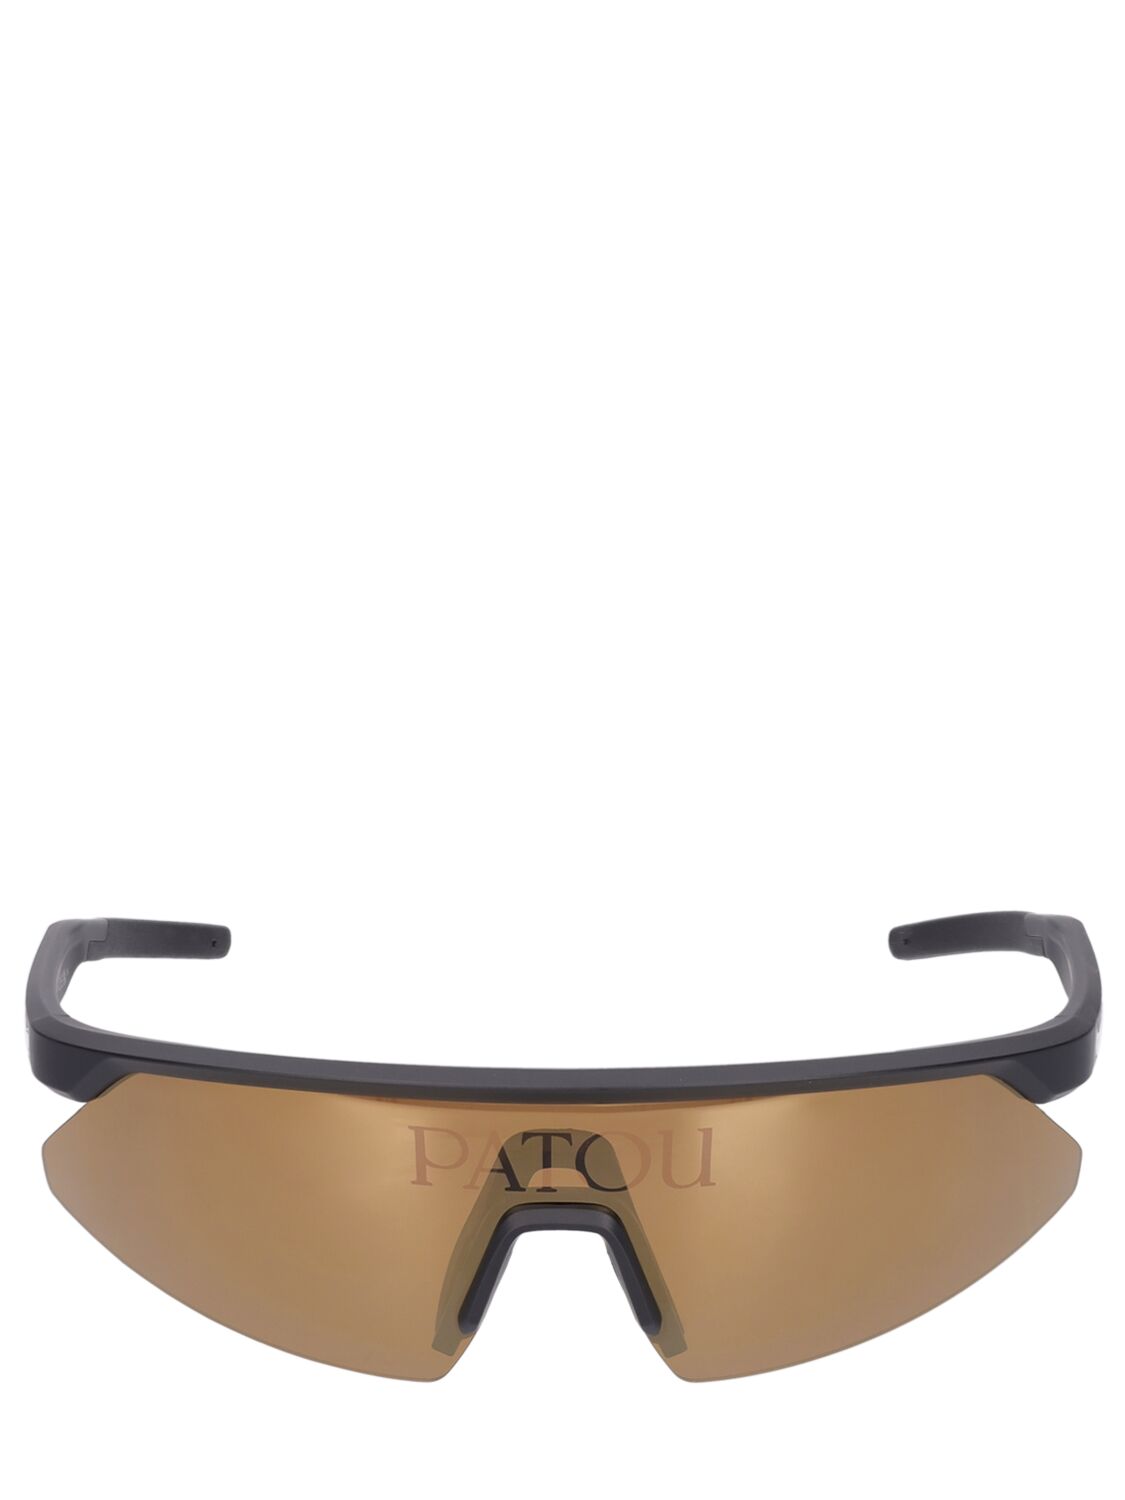 Image of Patou X Bollé Mask Sunglasses